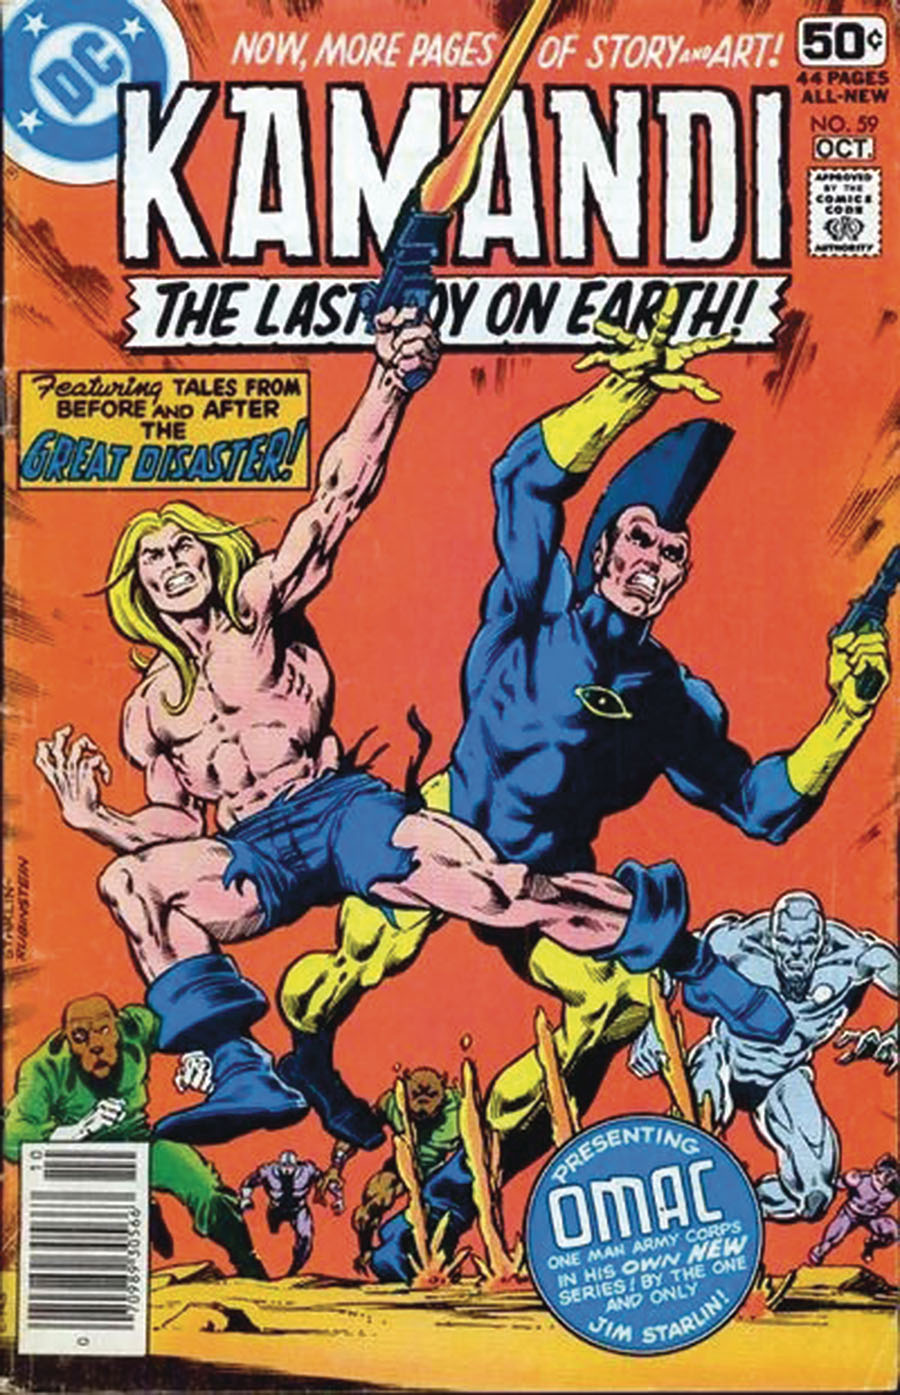 Kamandi The Last Boy On Earth #59 Cover B DF Jim Starlin Personal File Copy Signed By Jim Starlin